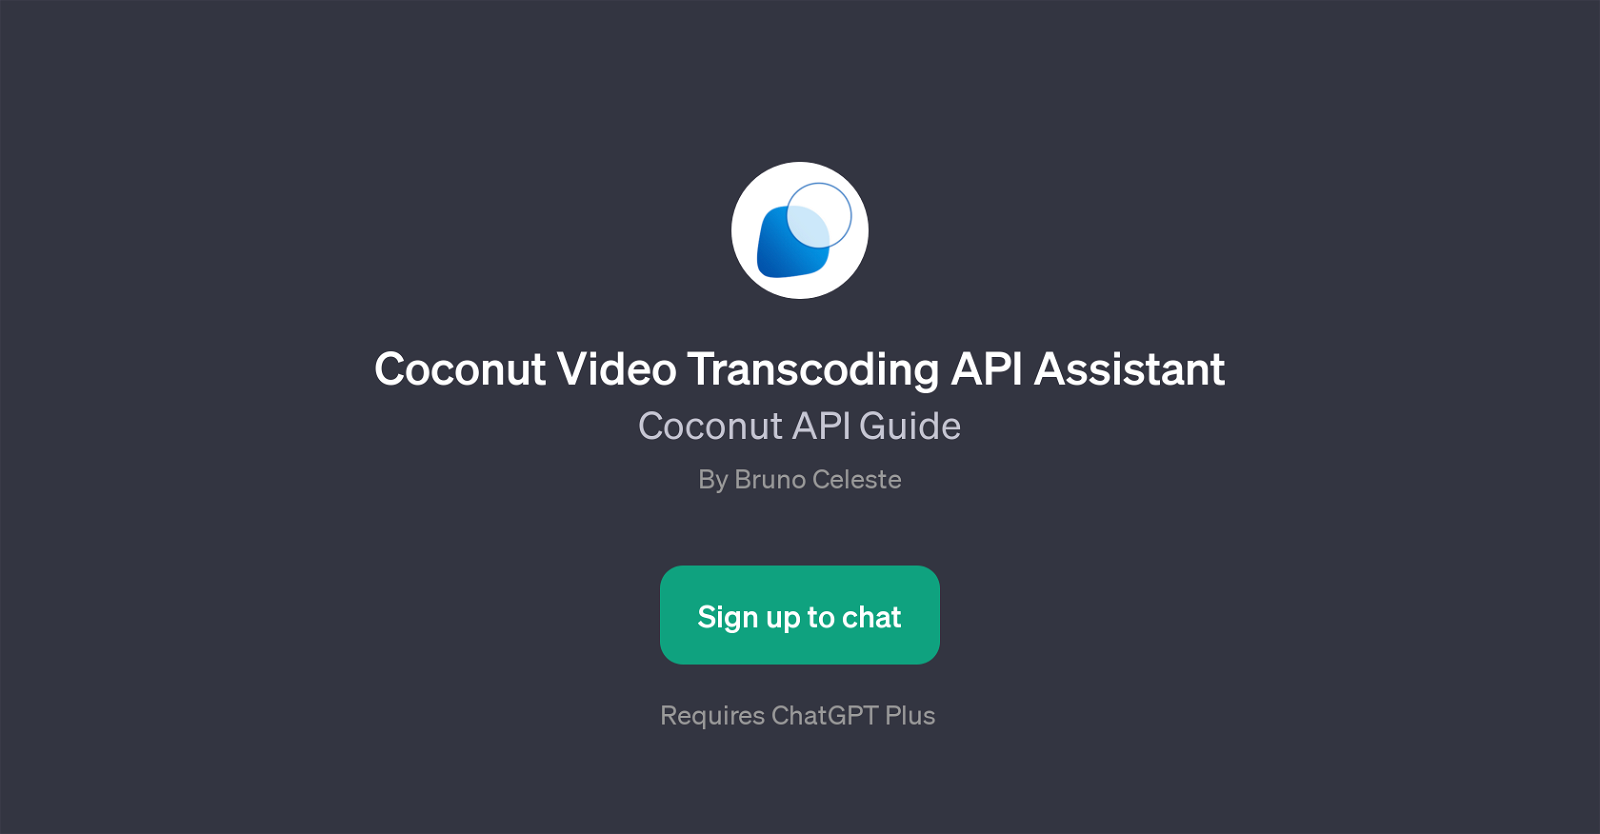 Coconut Video Transcoding API Assistant website